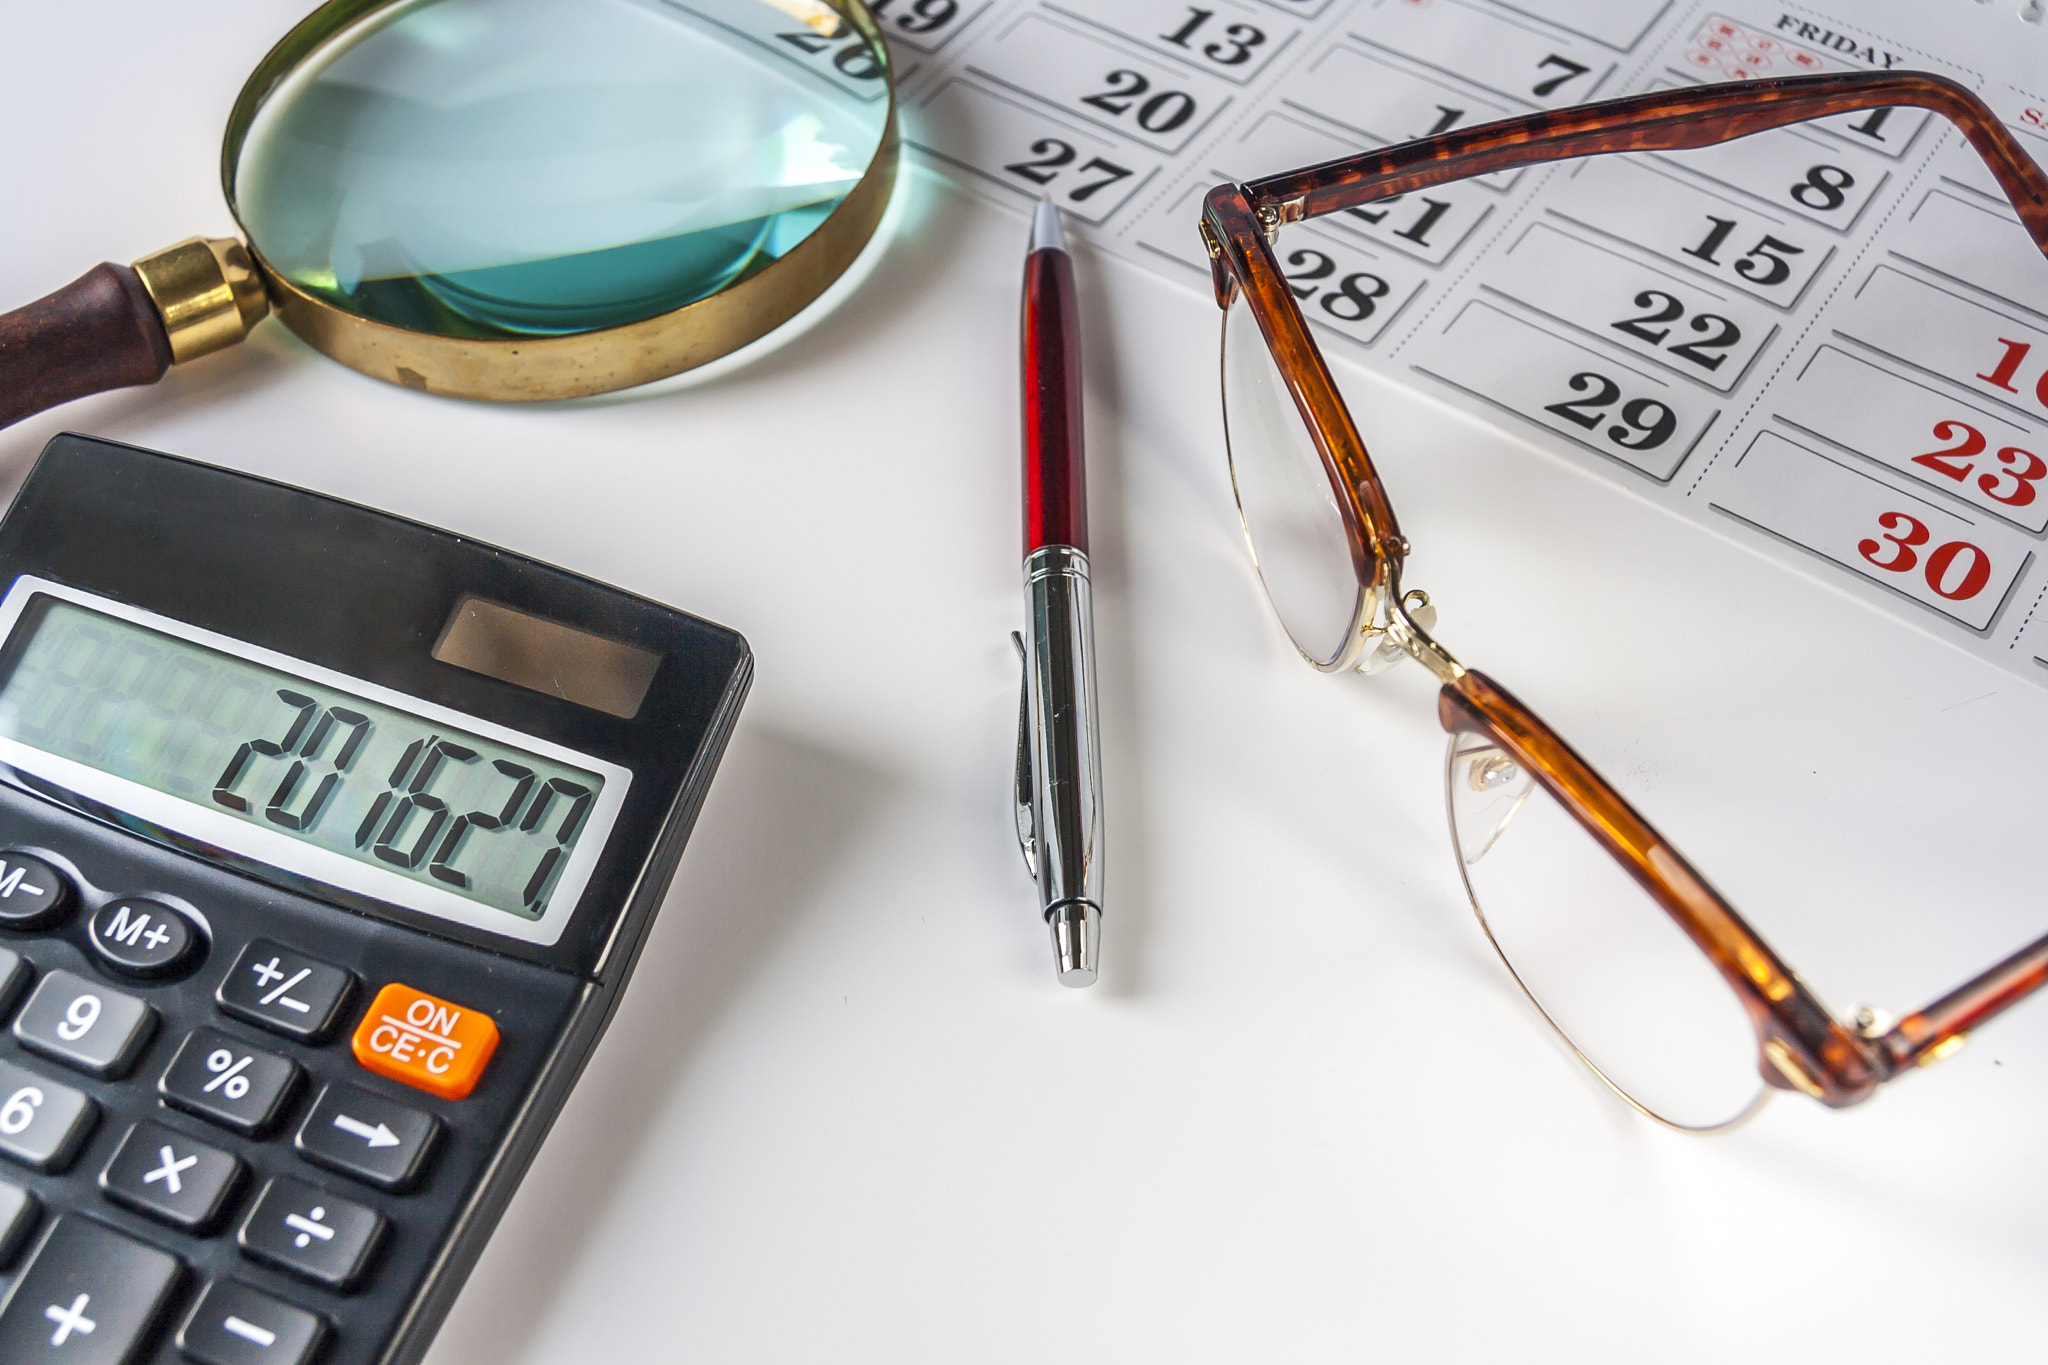 Calculator,Pen ,Magnifying Glass,Calendar And Eyeglasses